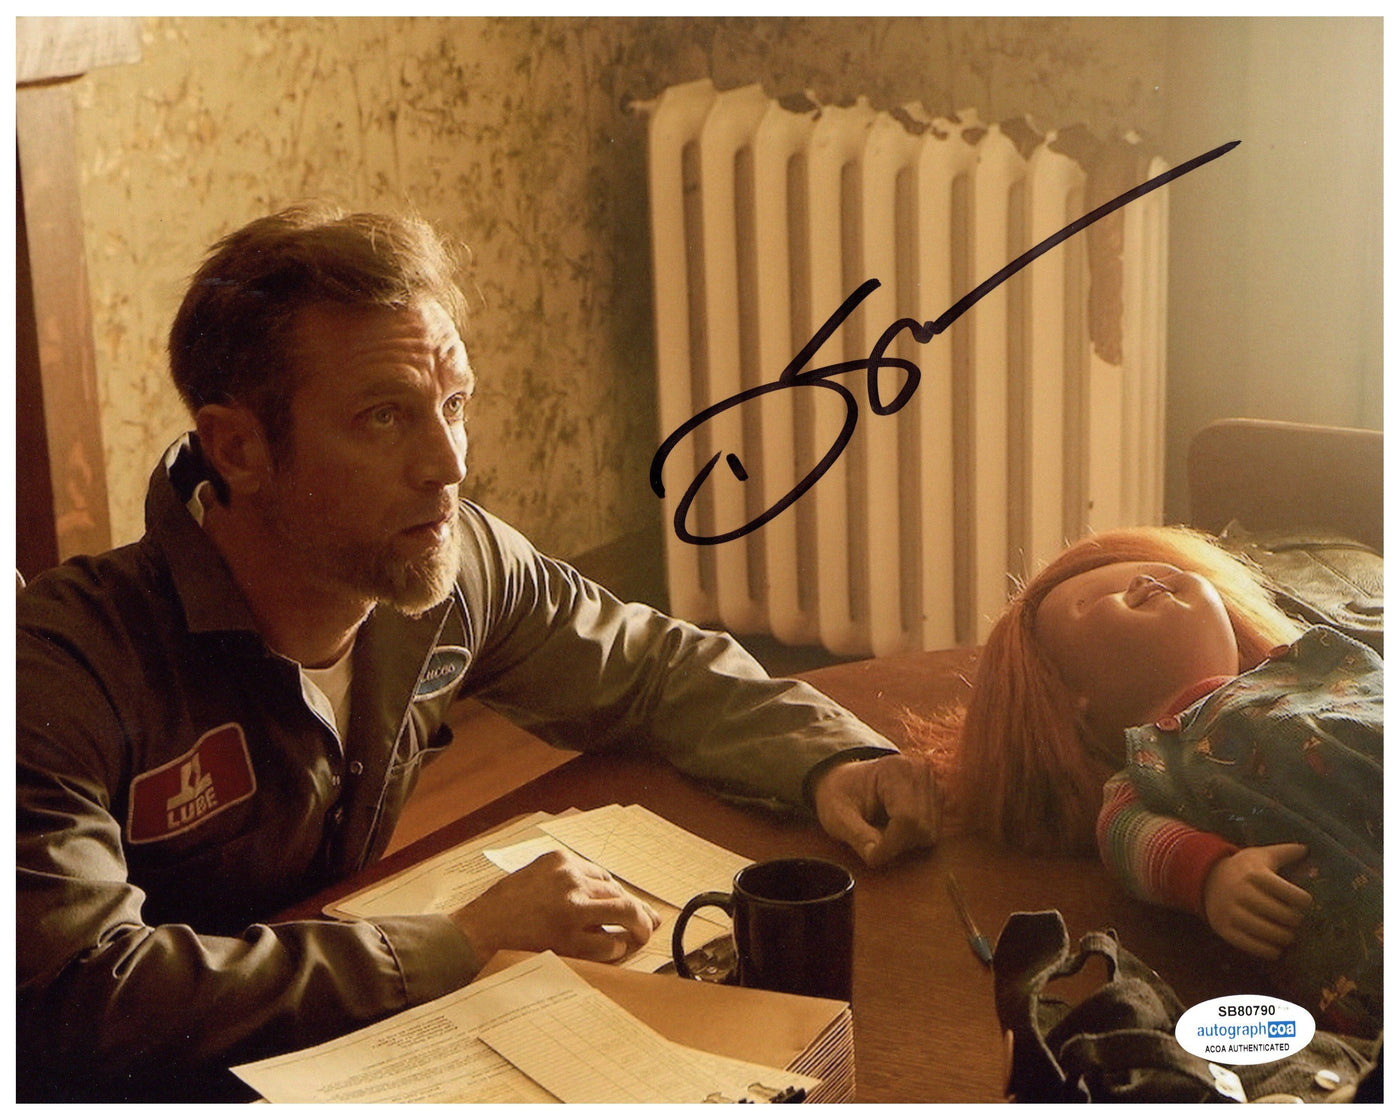 Devon Sawa Signed 8x10 Photo - Chucky Horror Autographed AutographCOA